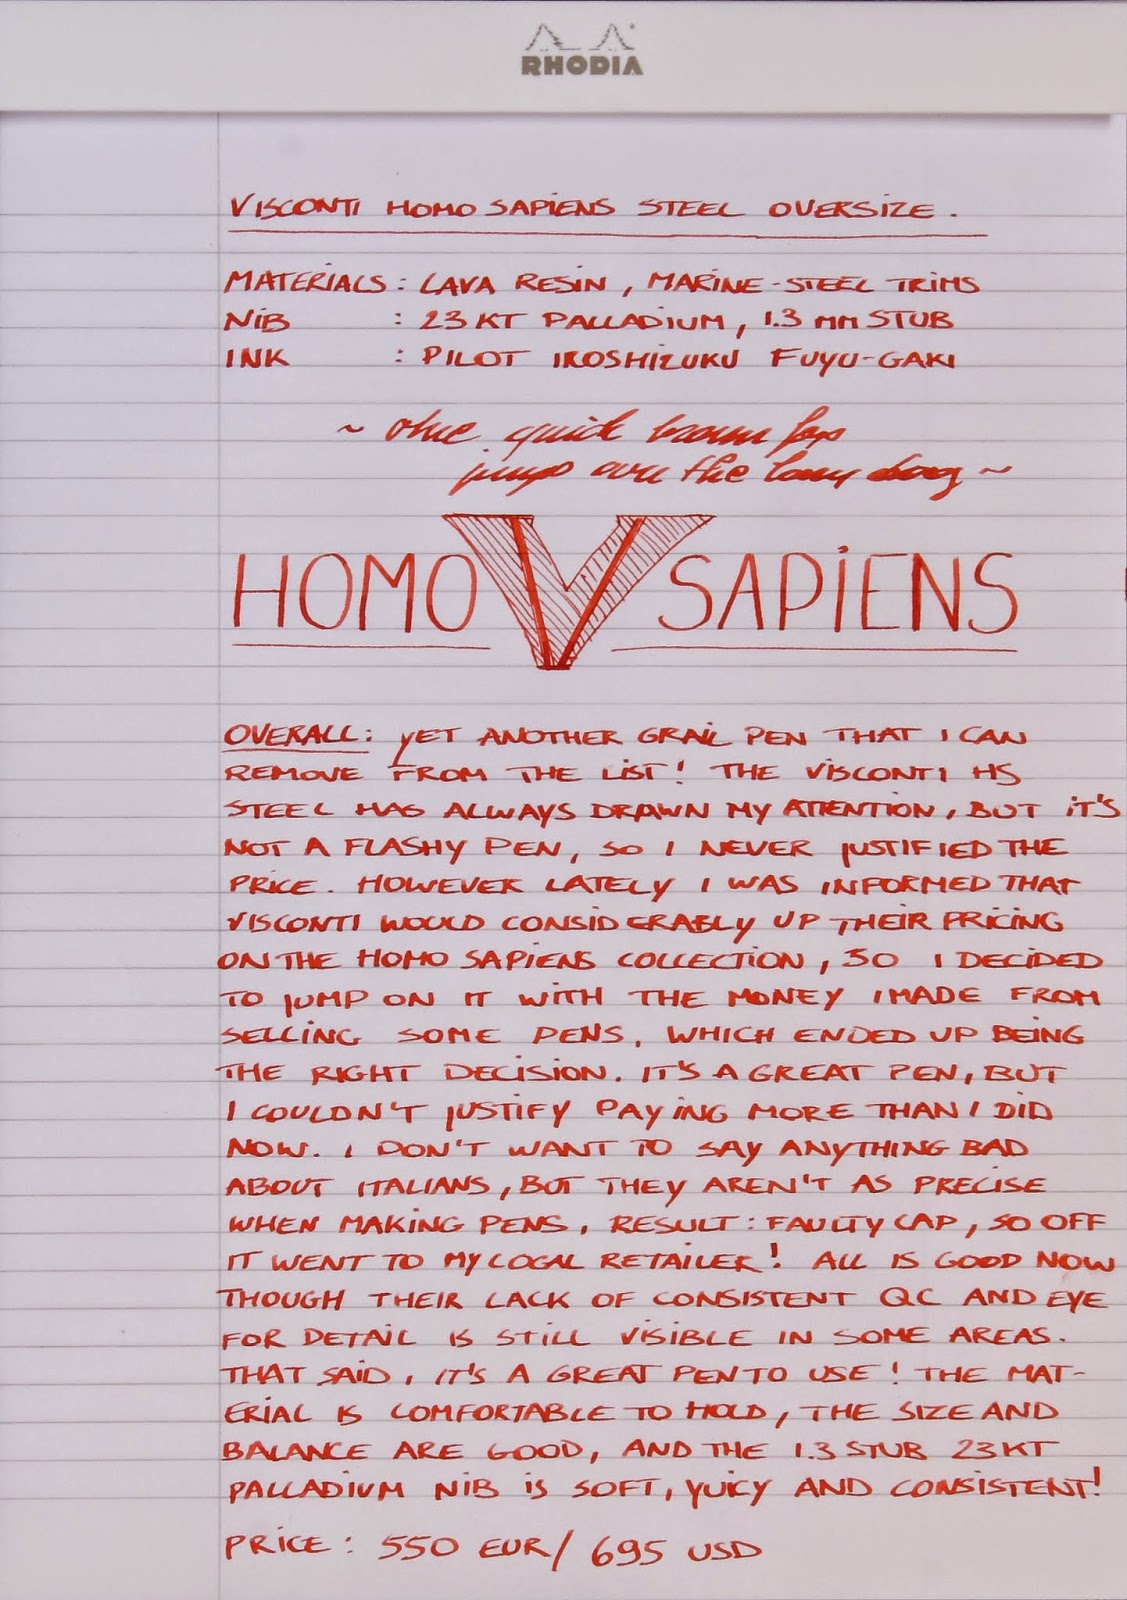 Visconti Homo Sapiens Steel Oversize Written Review